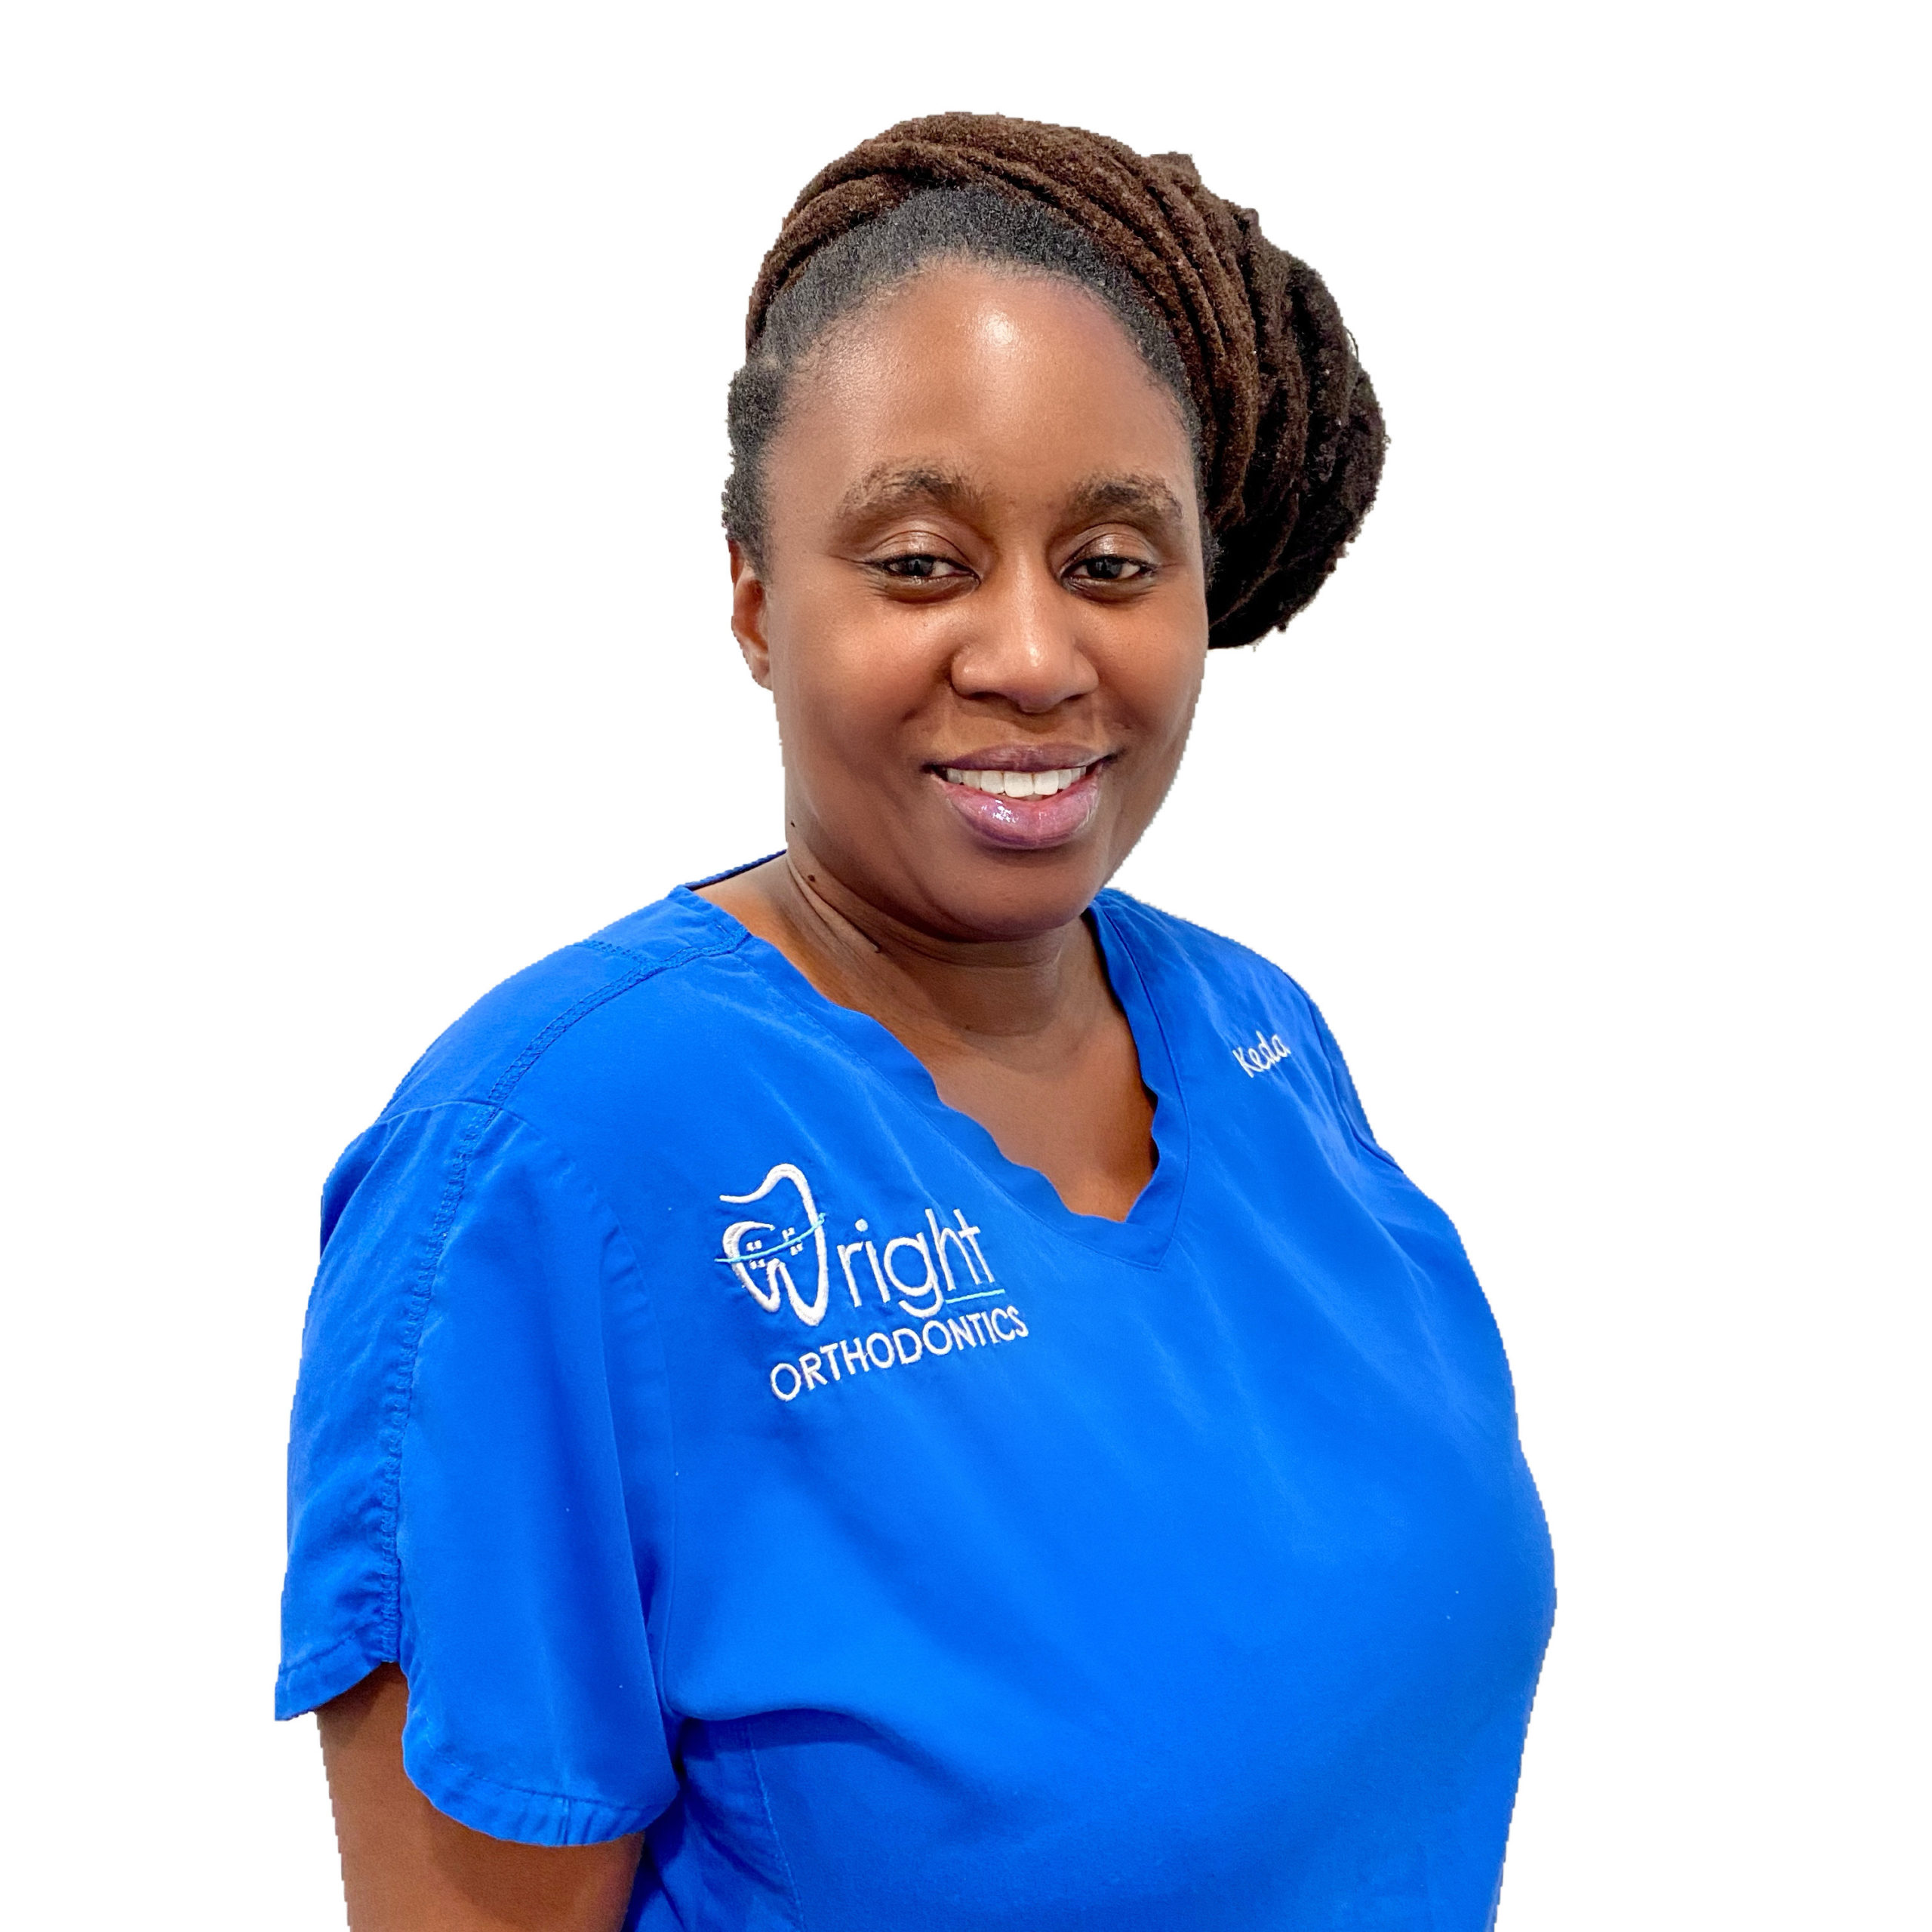 Orthodontic Assistant in Atlanta and Marietta, GA